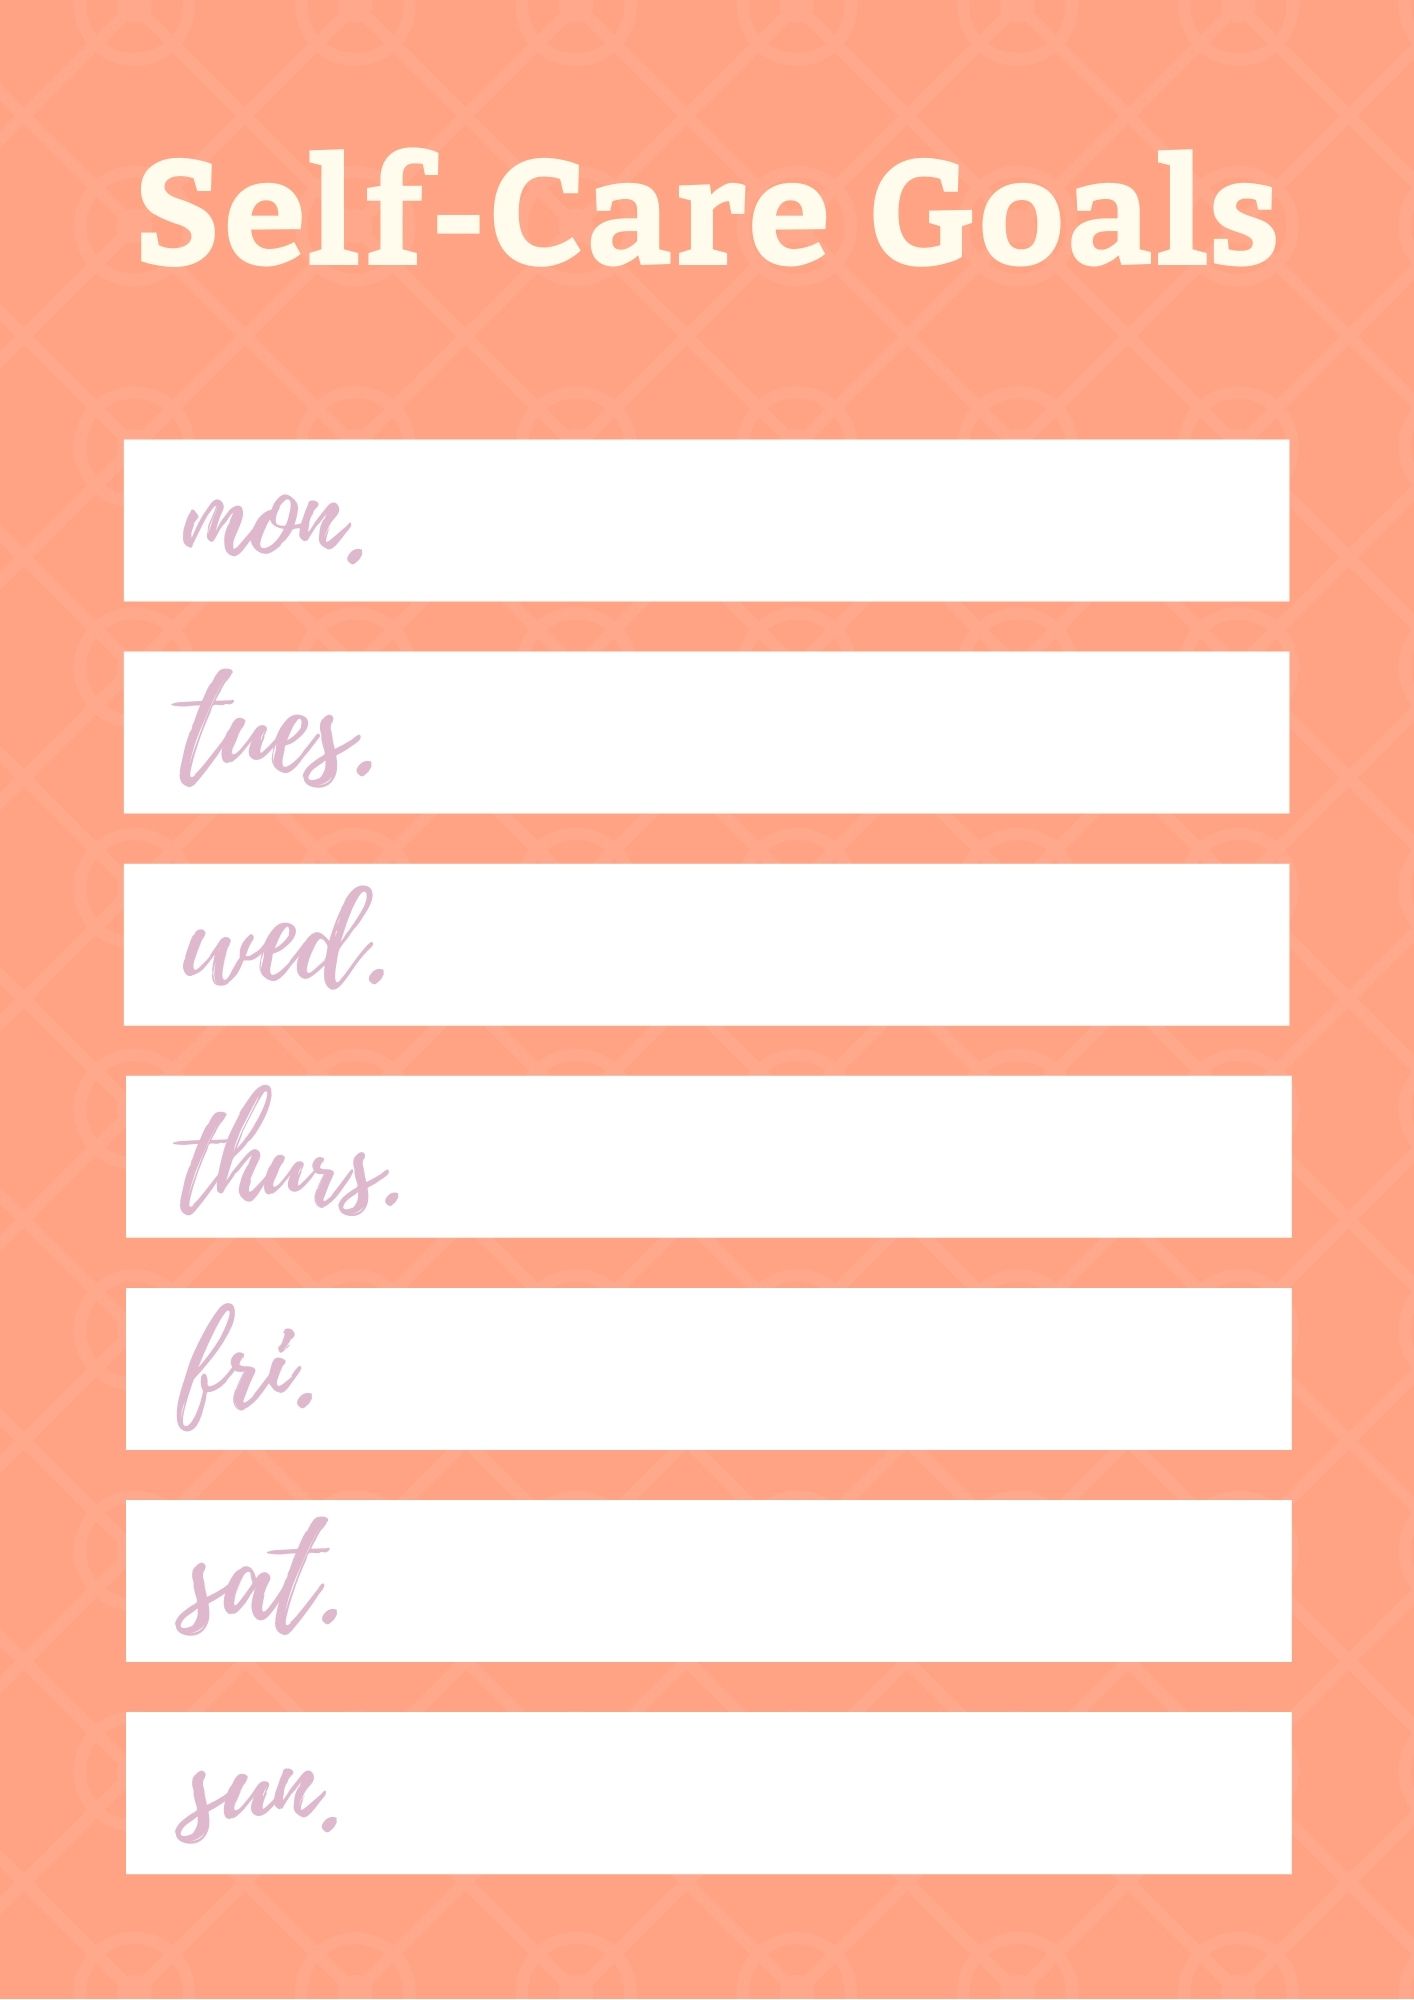 Self-Care Goal Schedule